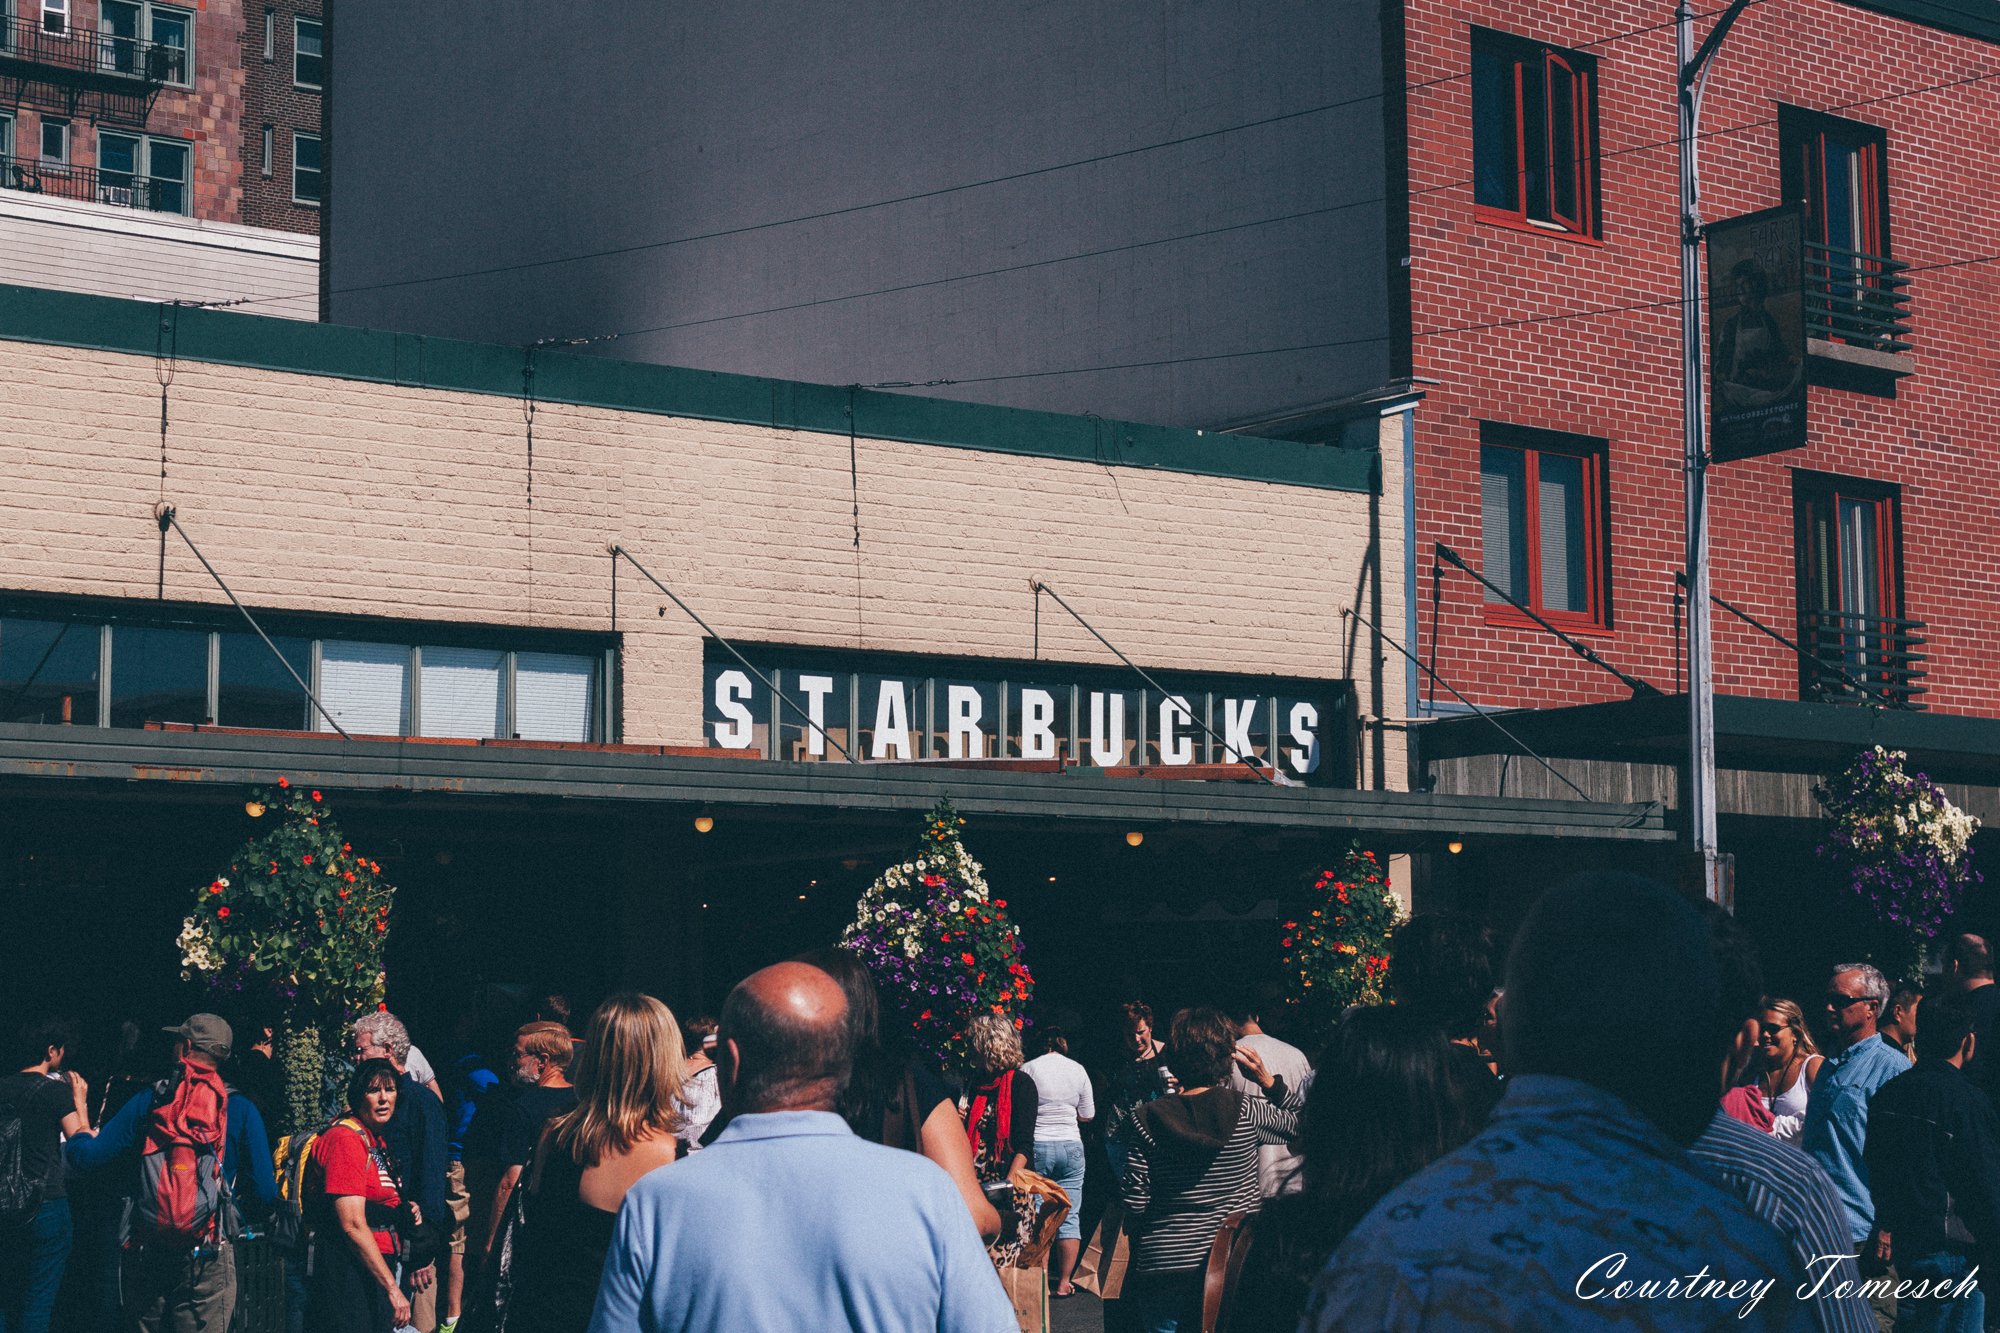  The First Starbucks